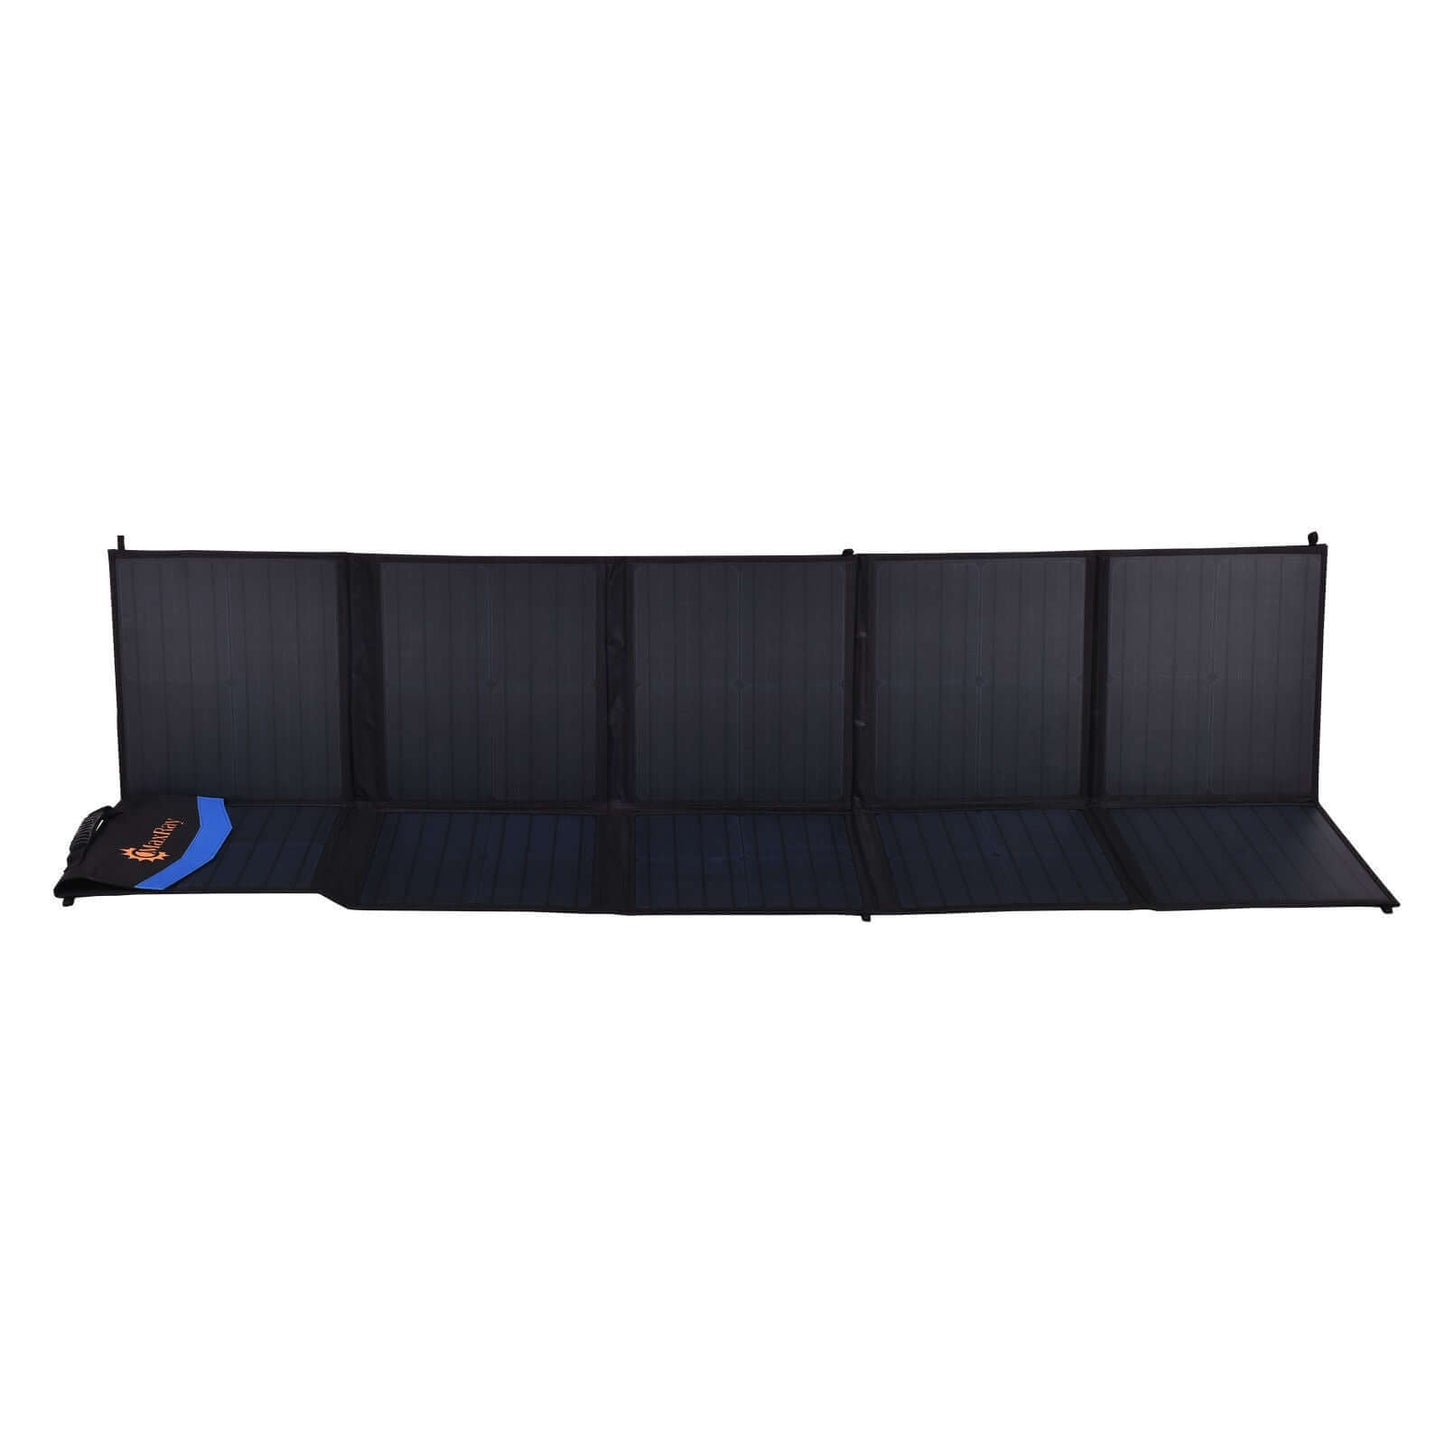 350W 12V MaxRay Folding Panel Blanket With Regulator